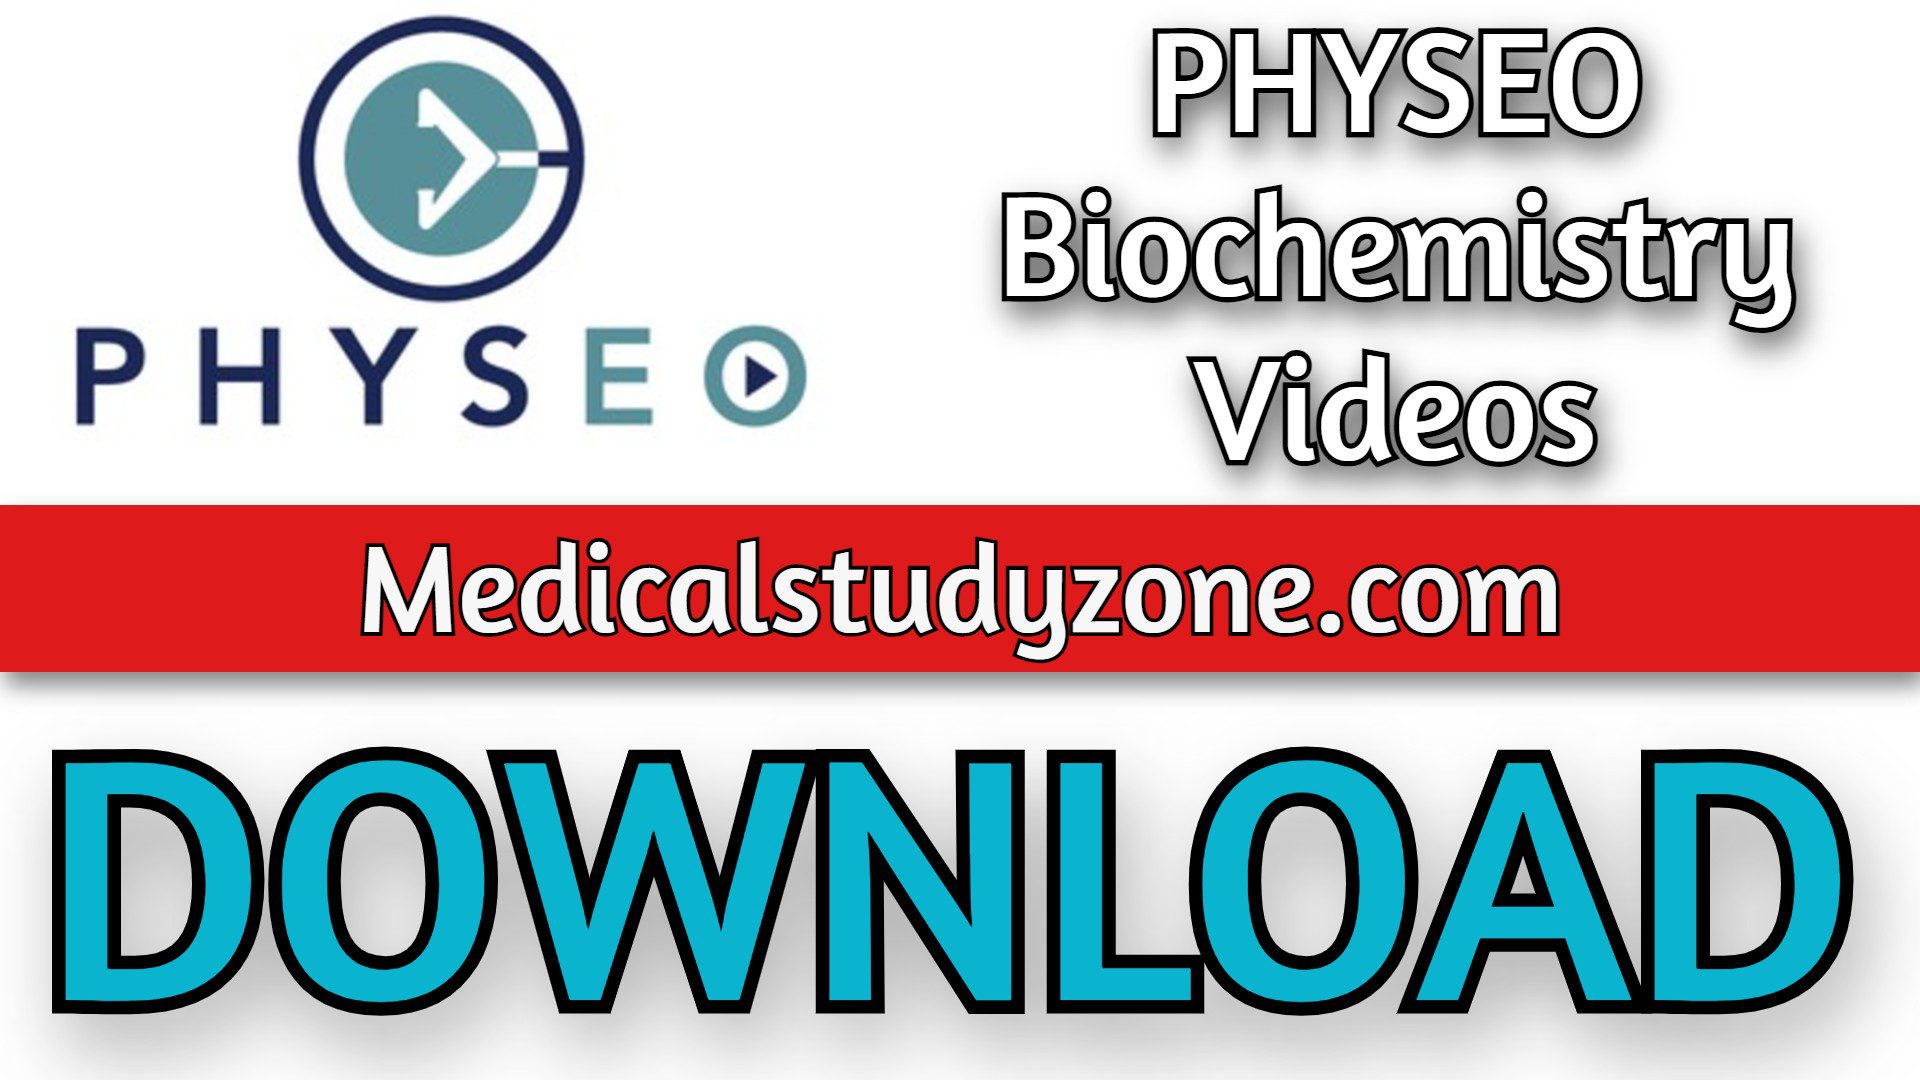 PHYSEO Biochemistry Videos 2021 Free Download